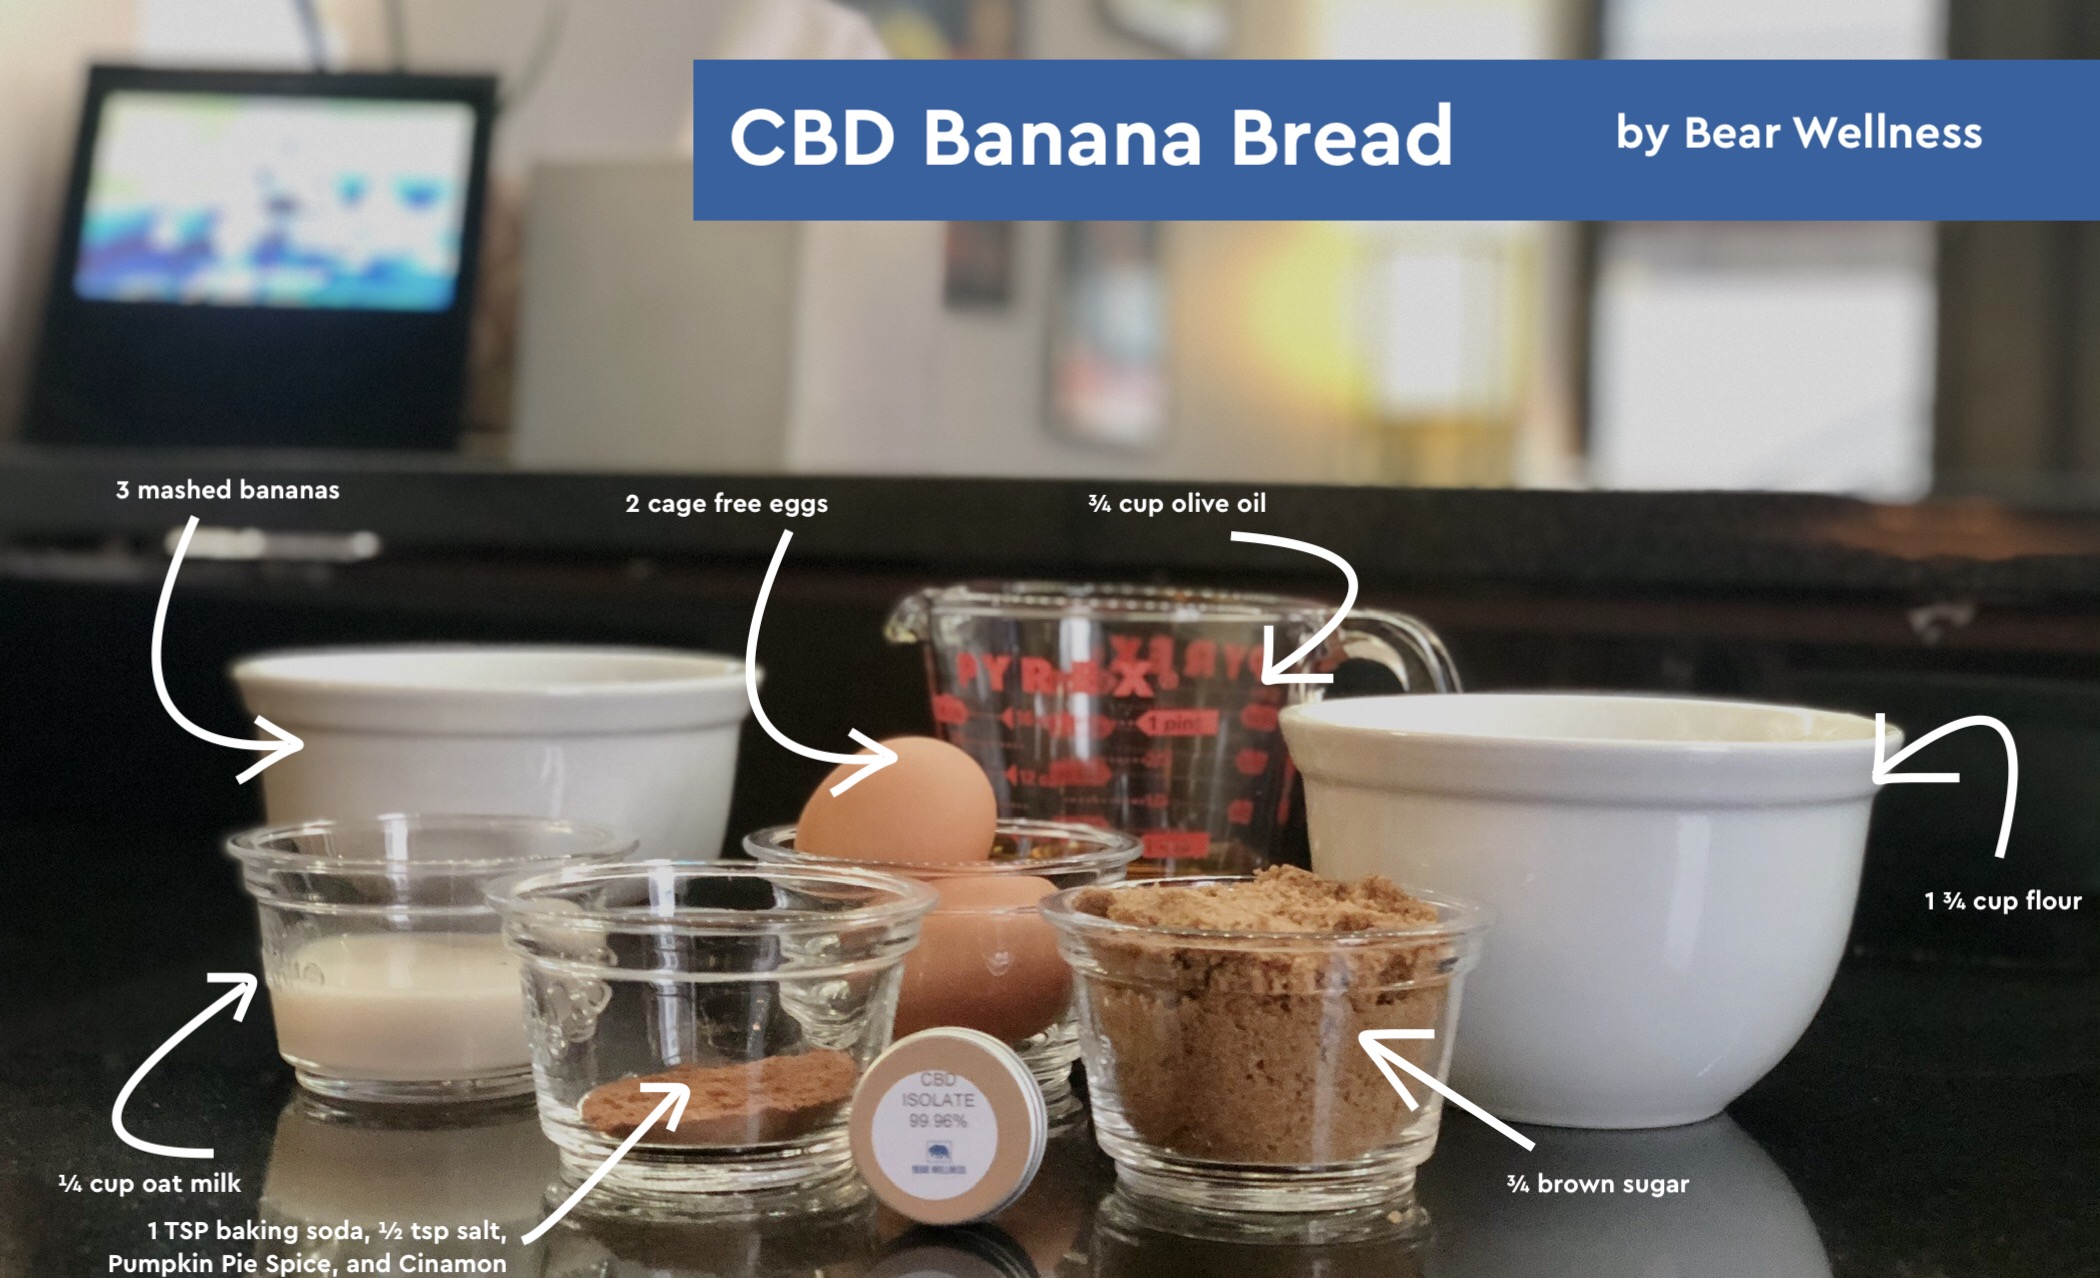 CBD Banana Bread by Bear Wellness